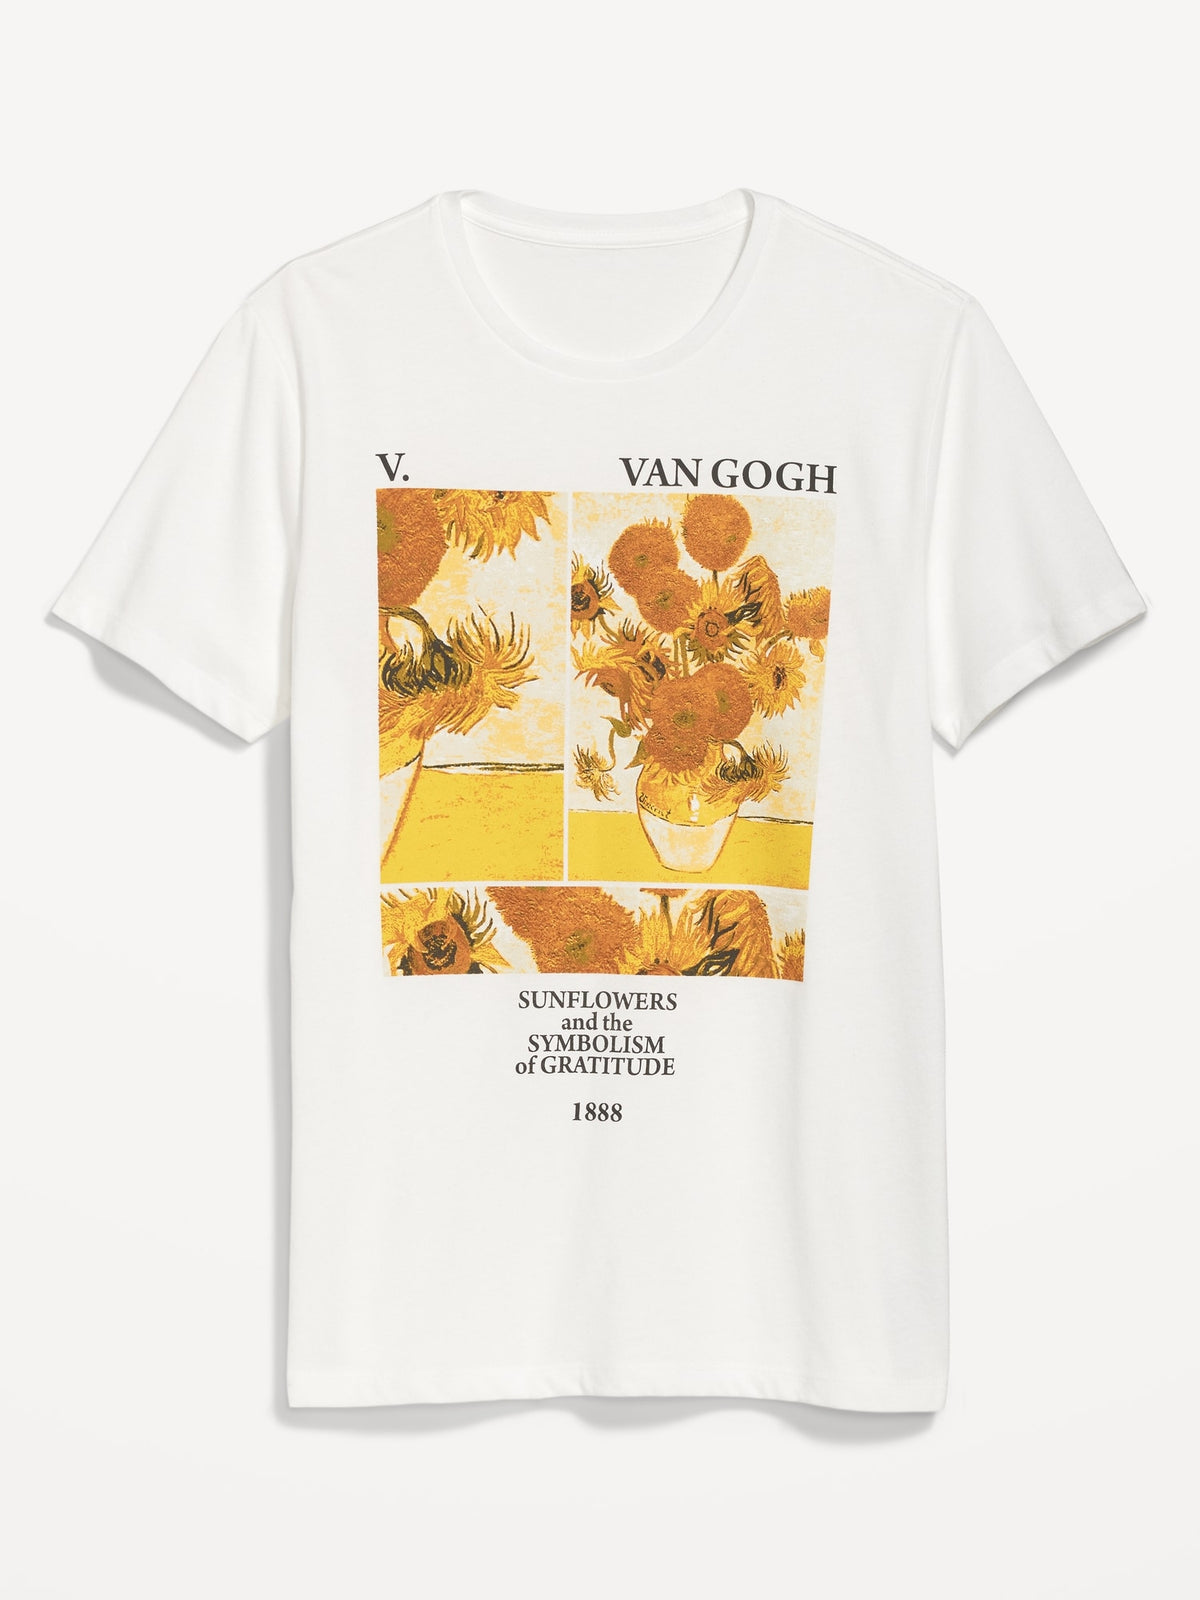 Van Gogh (Match the Fam)